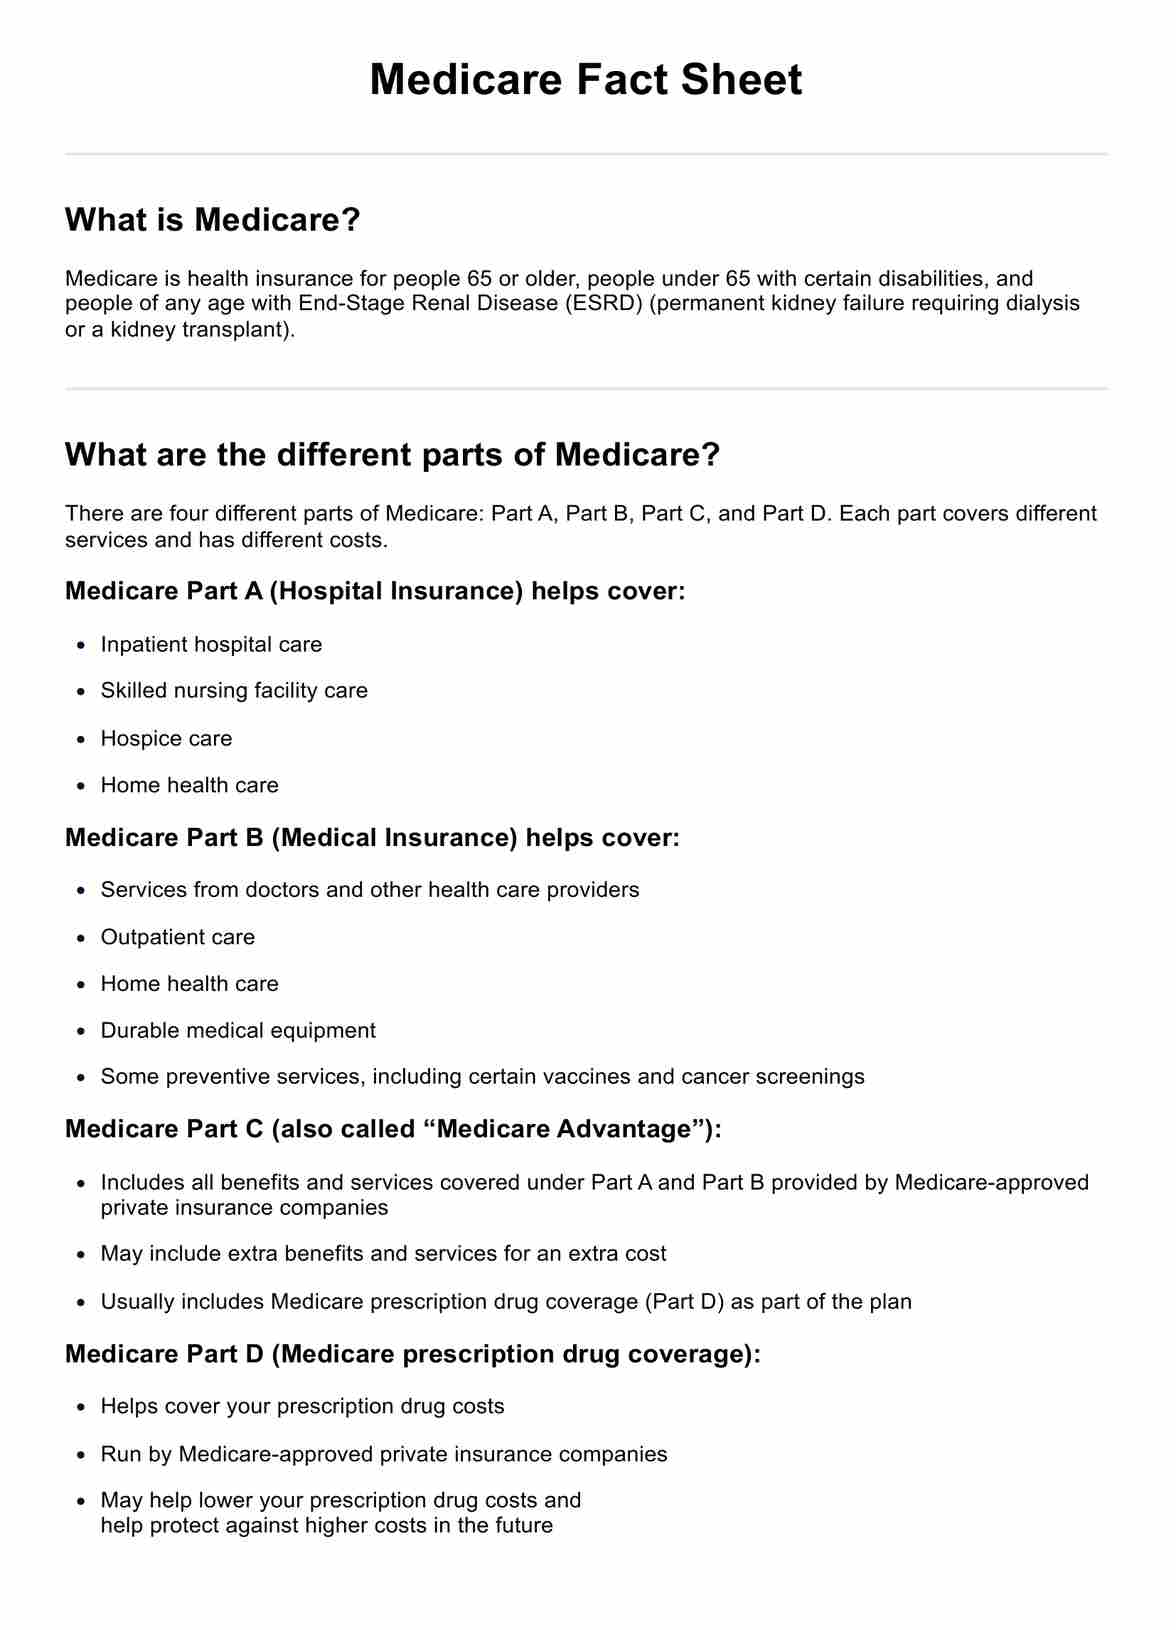 Medicare Fact Sheet PDF Example